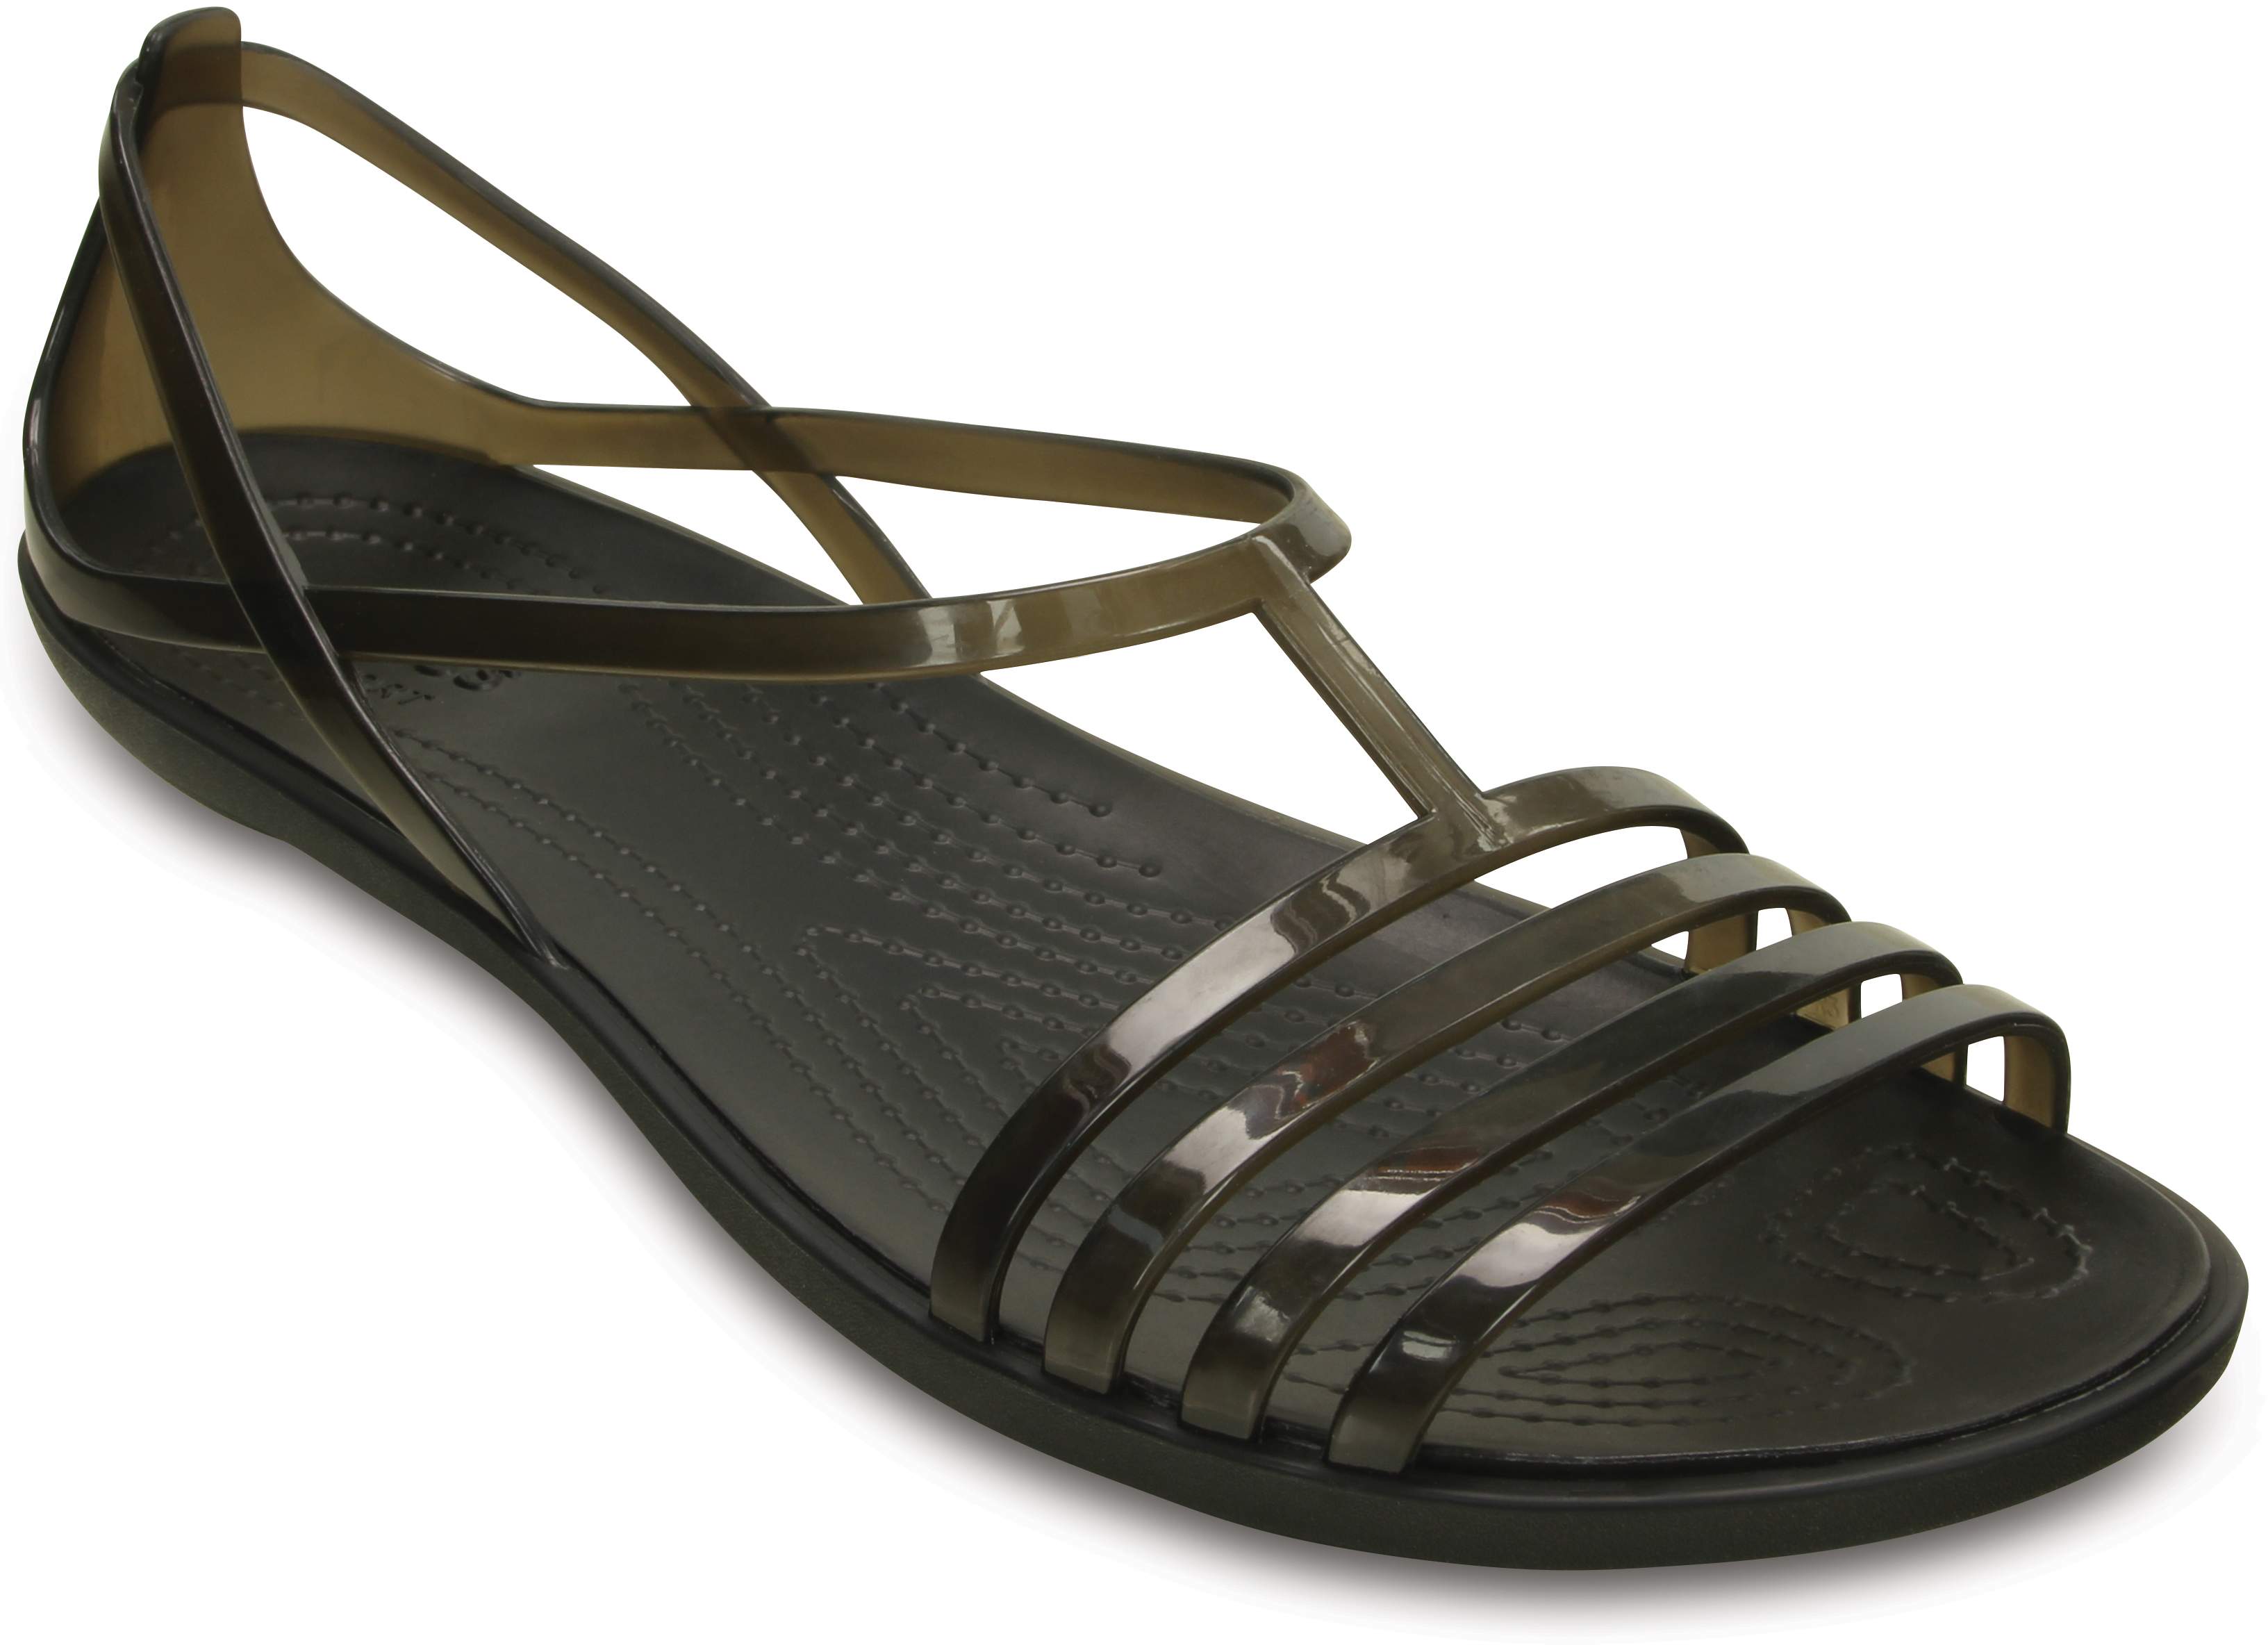 crocs isabella sandal